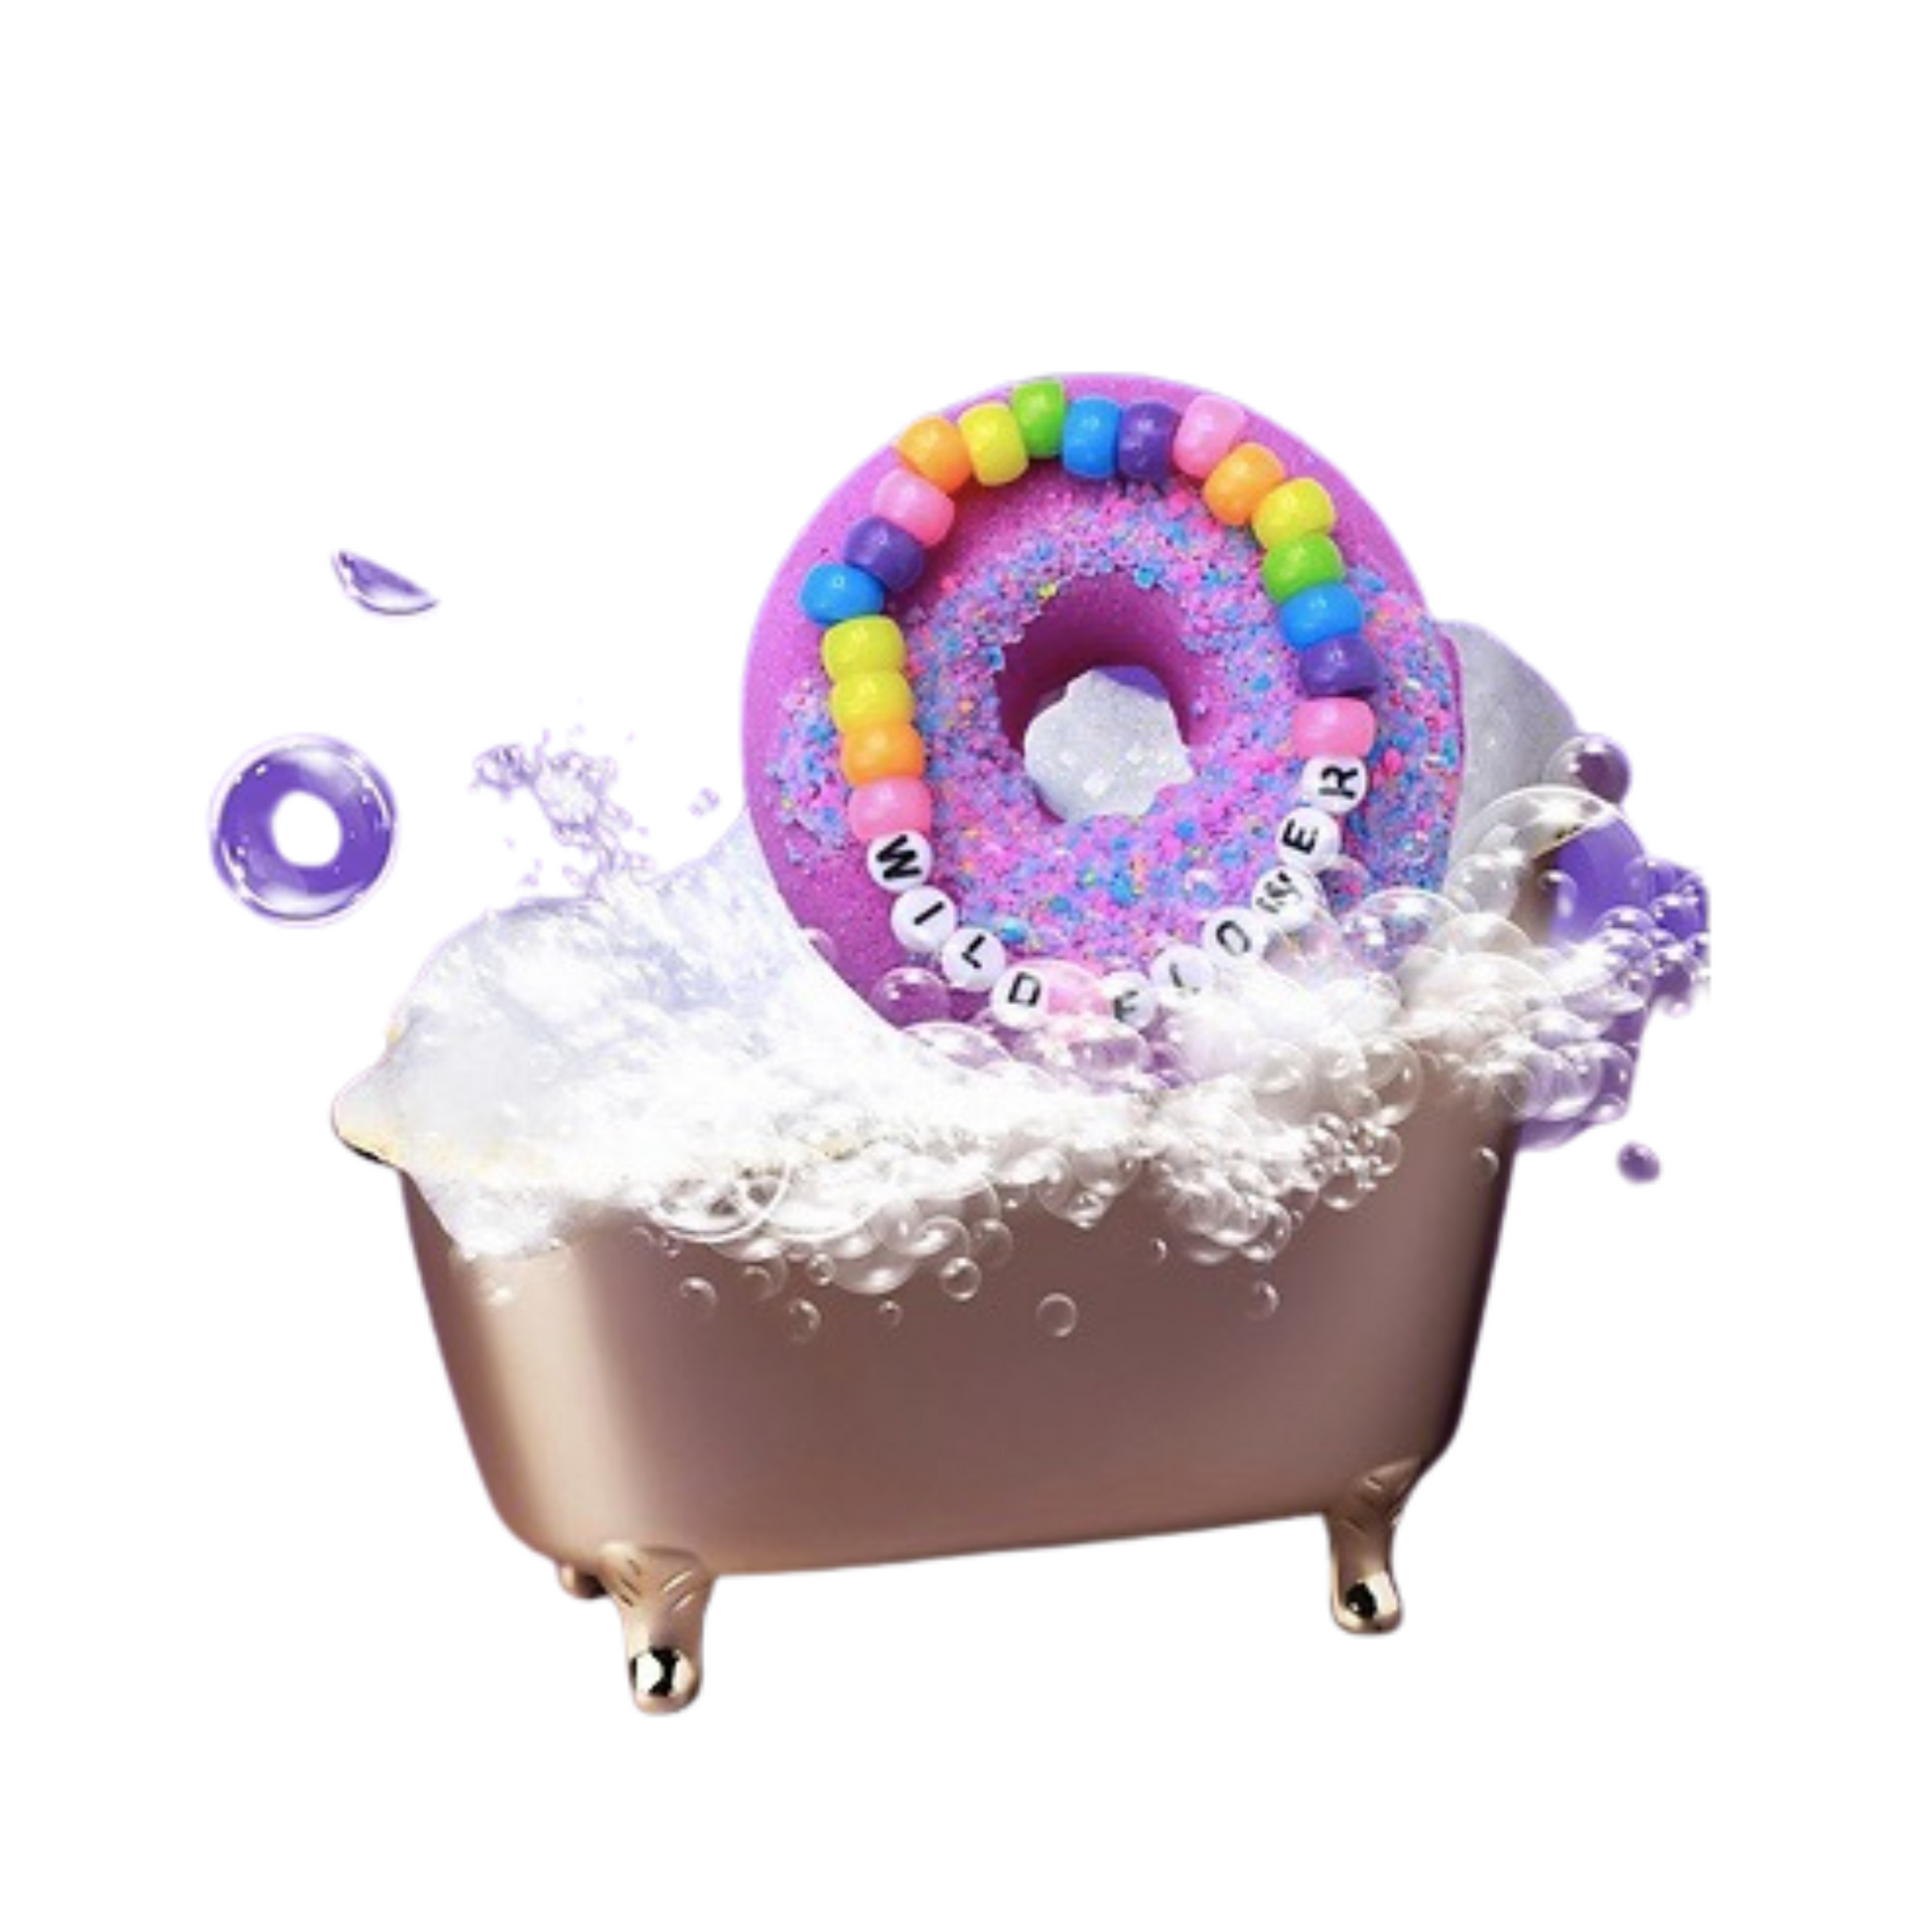 Donut Bath Bomb and bracelet set in purple